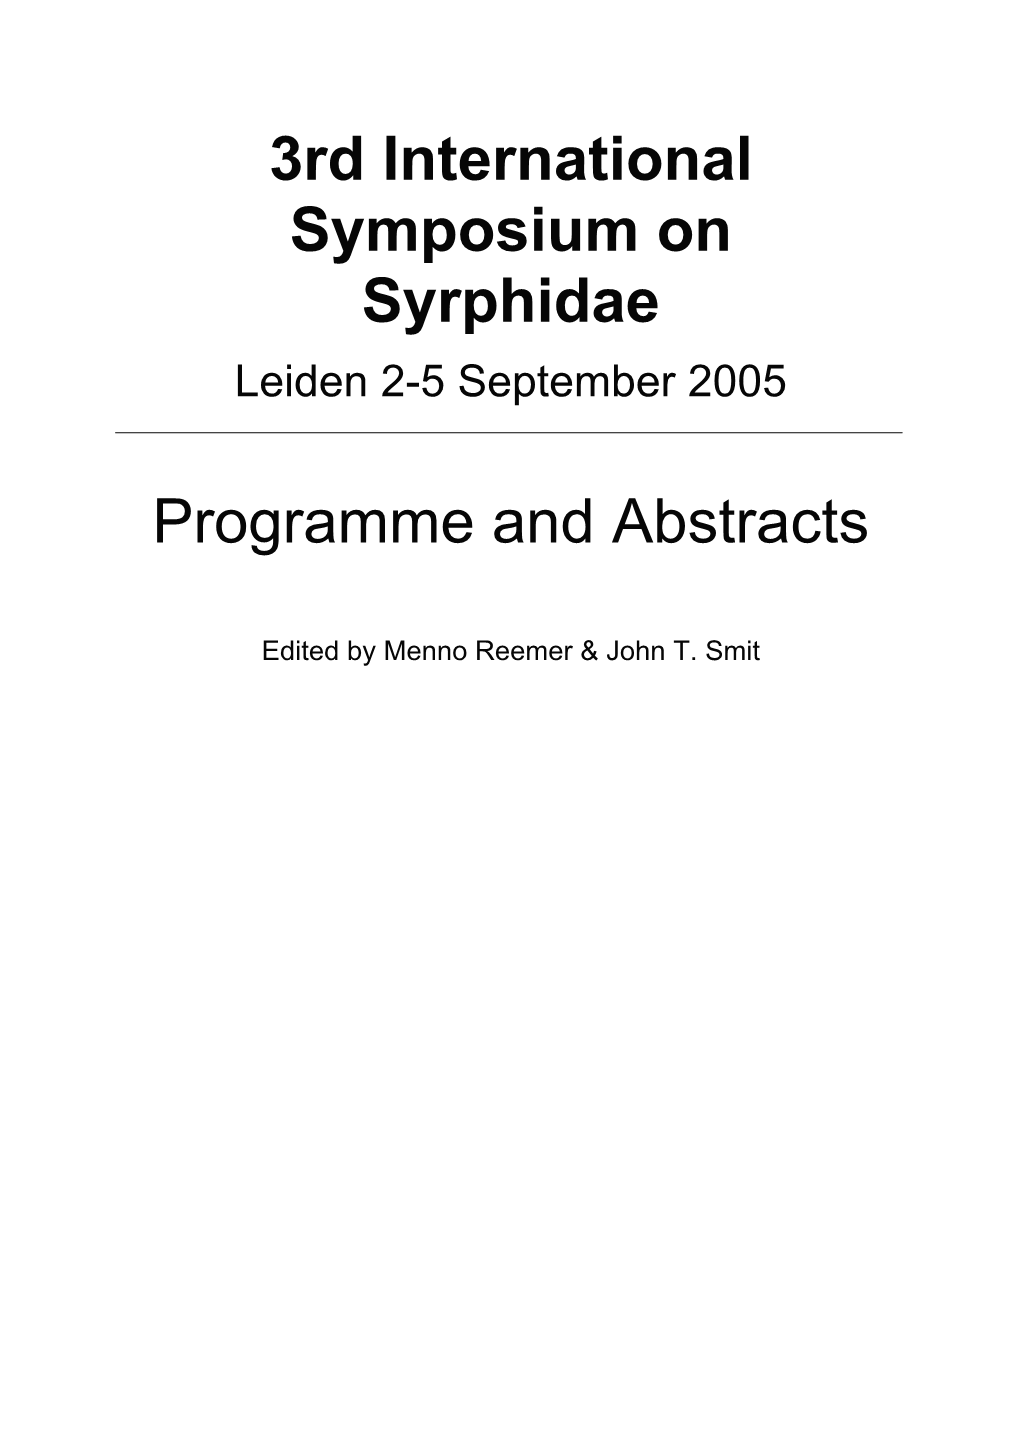 3Rd International Symposium on Syrphidae